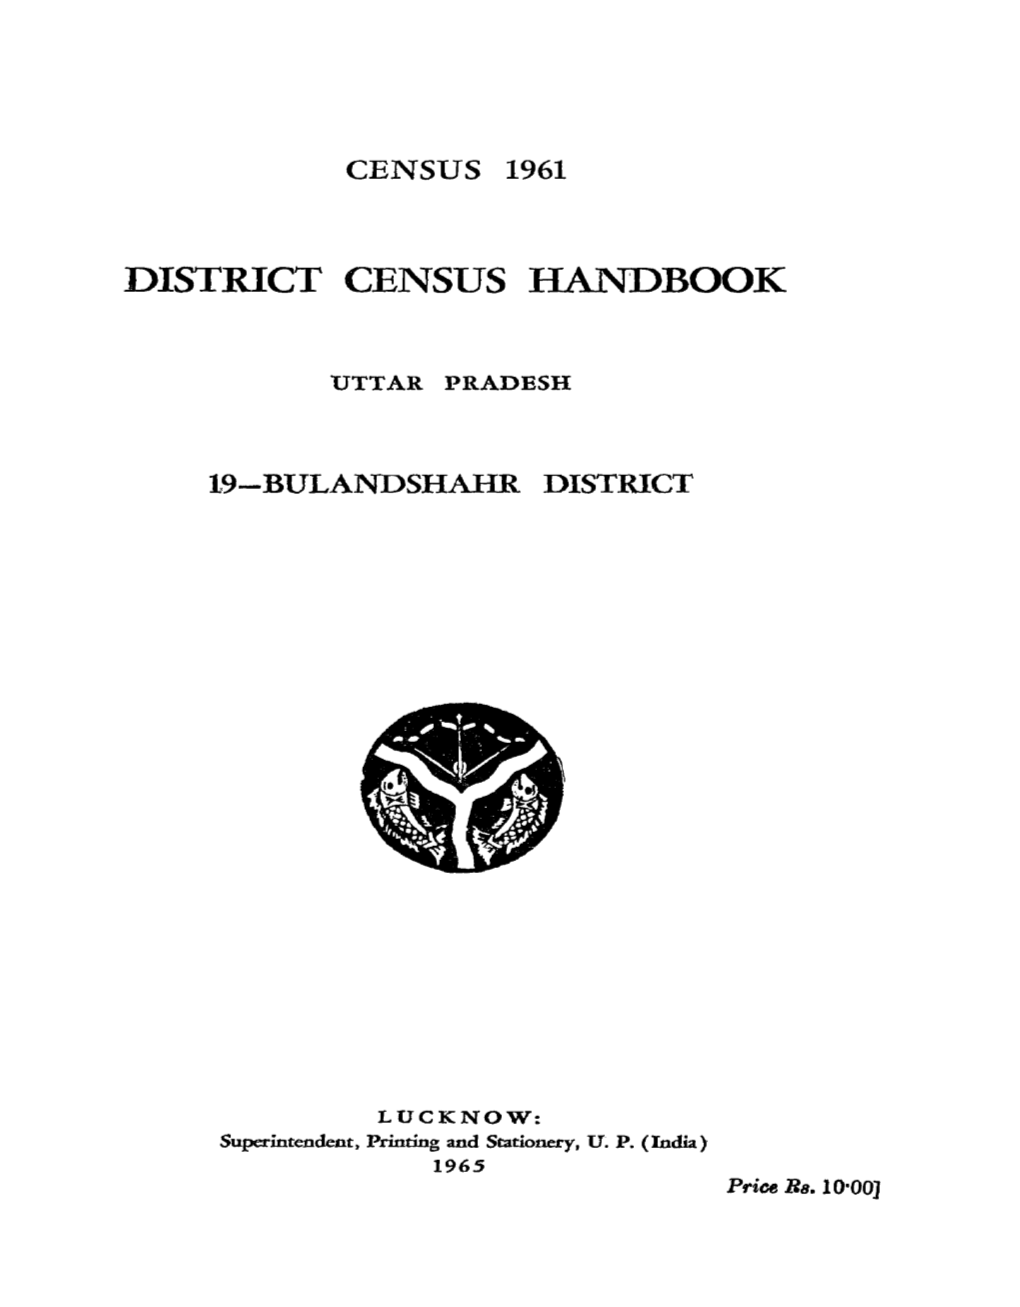 District Census Handbook, 19-Bulandshahr, Uttar Pradesh